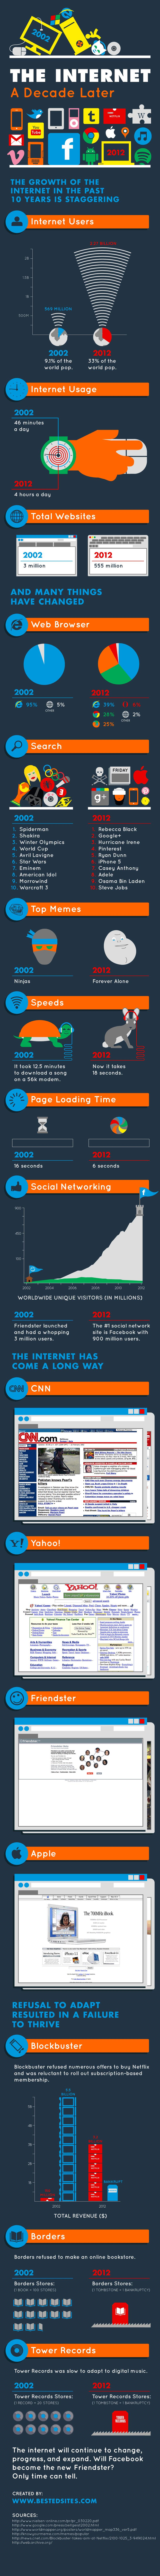 Infographie: 10 ans d’internet 2002 – 2012